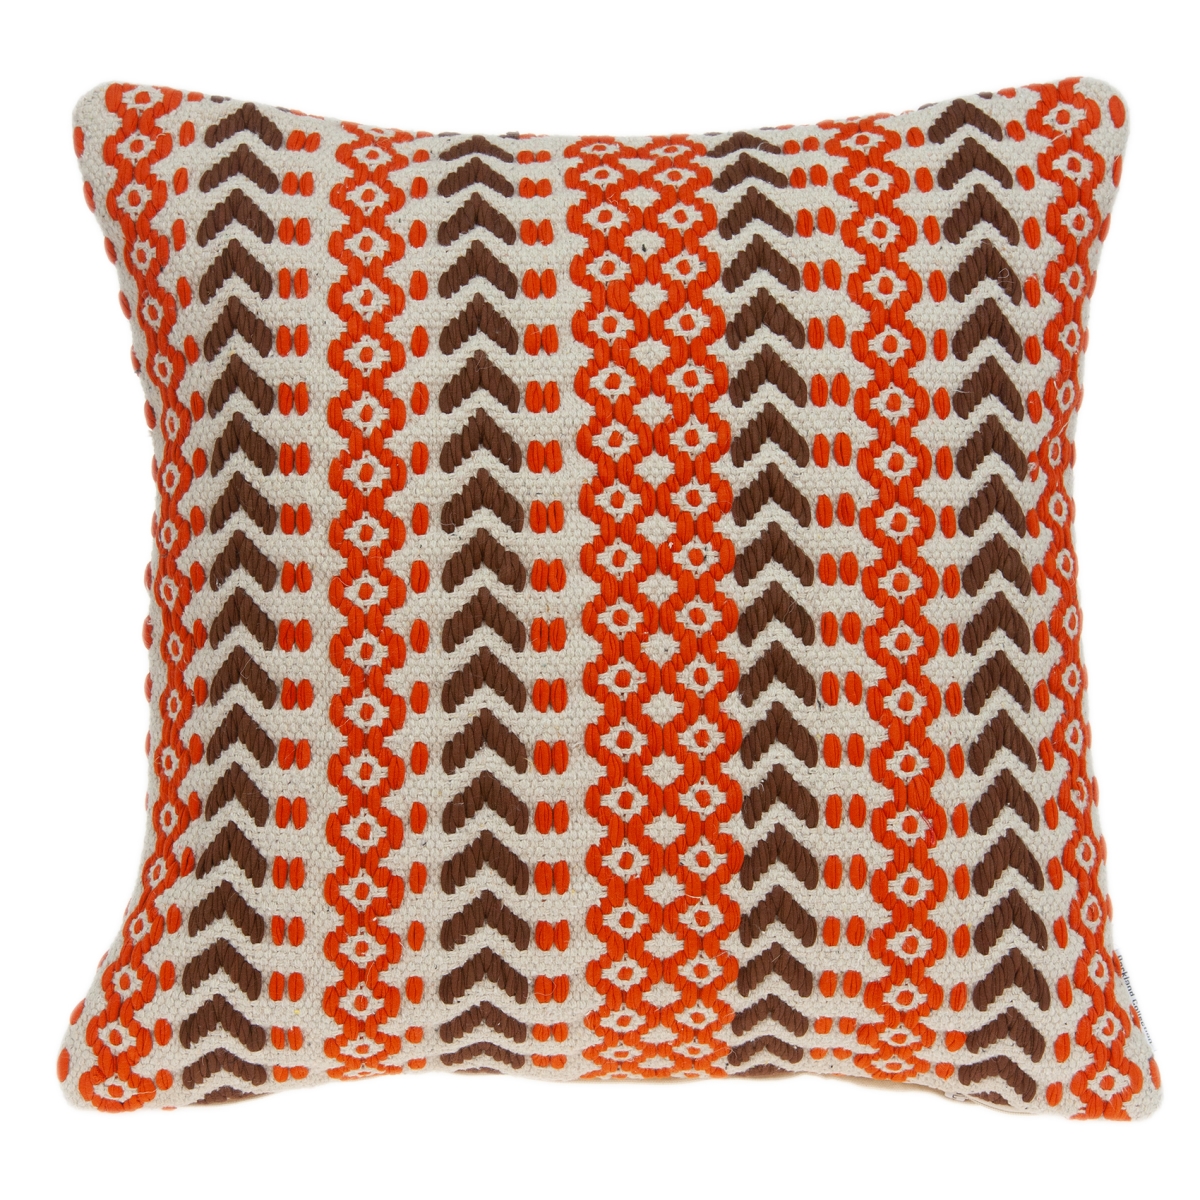 Pild11125c Larka Orange, Tan & Brown Square Bohemian Pillow Cover - 20 X 20 X 0.5 In.